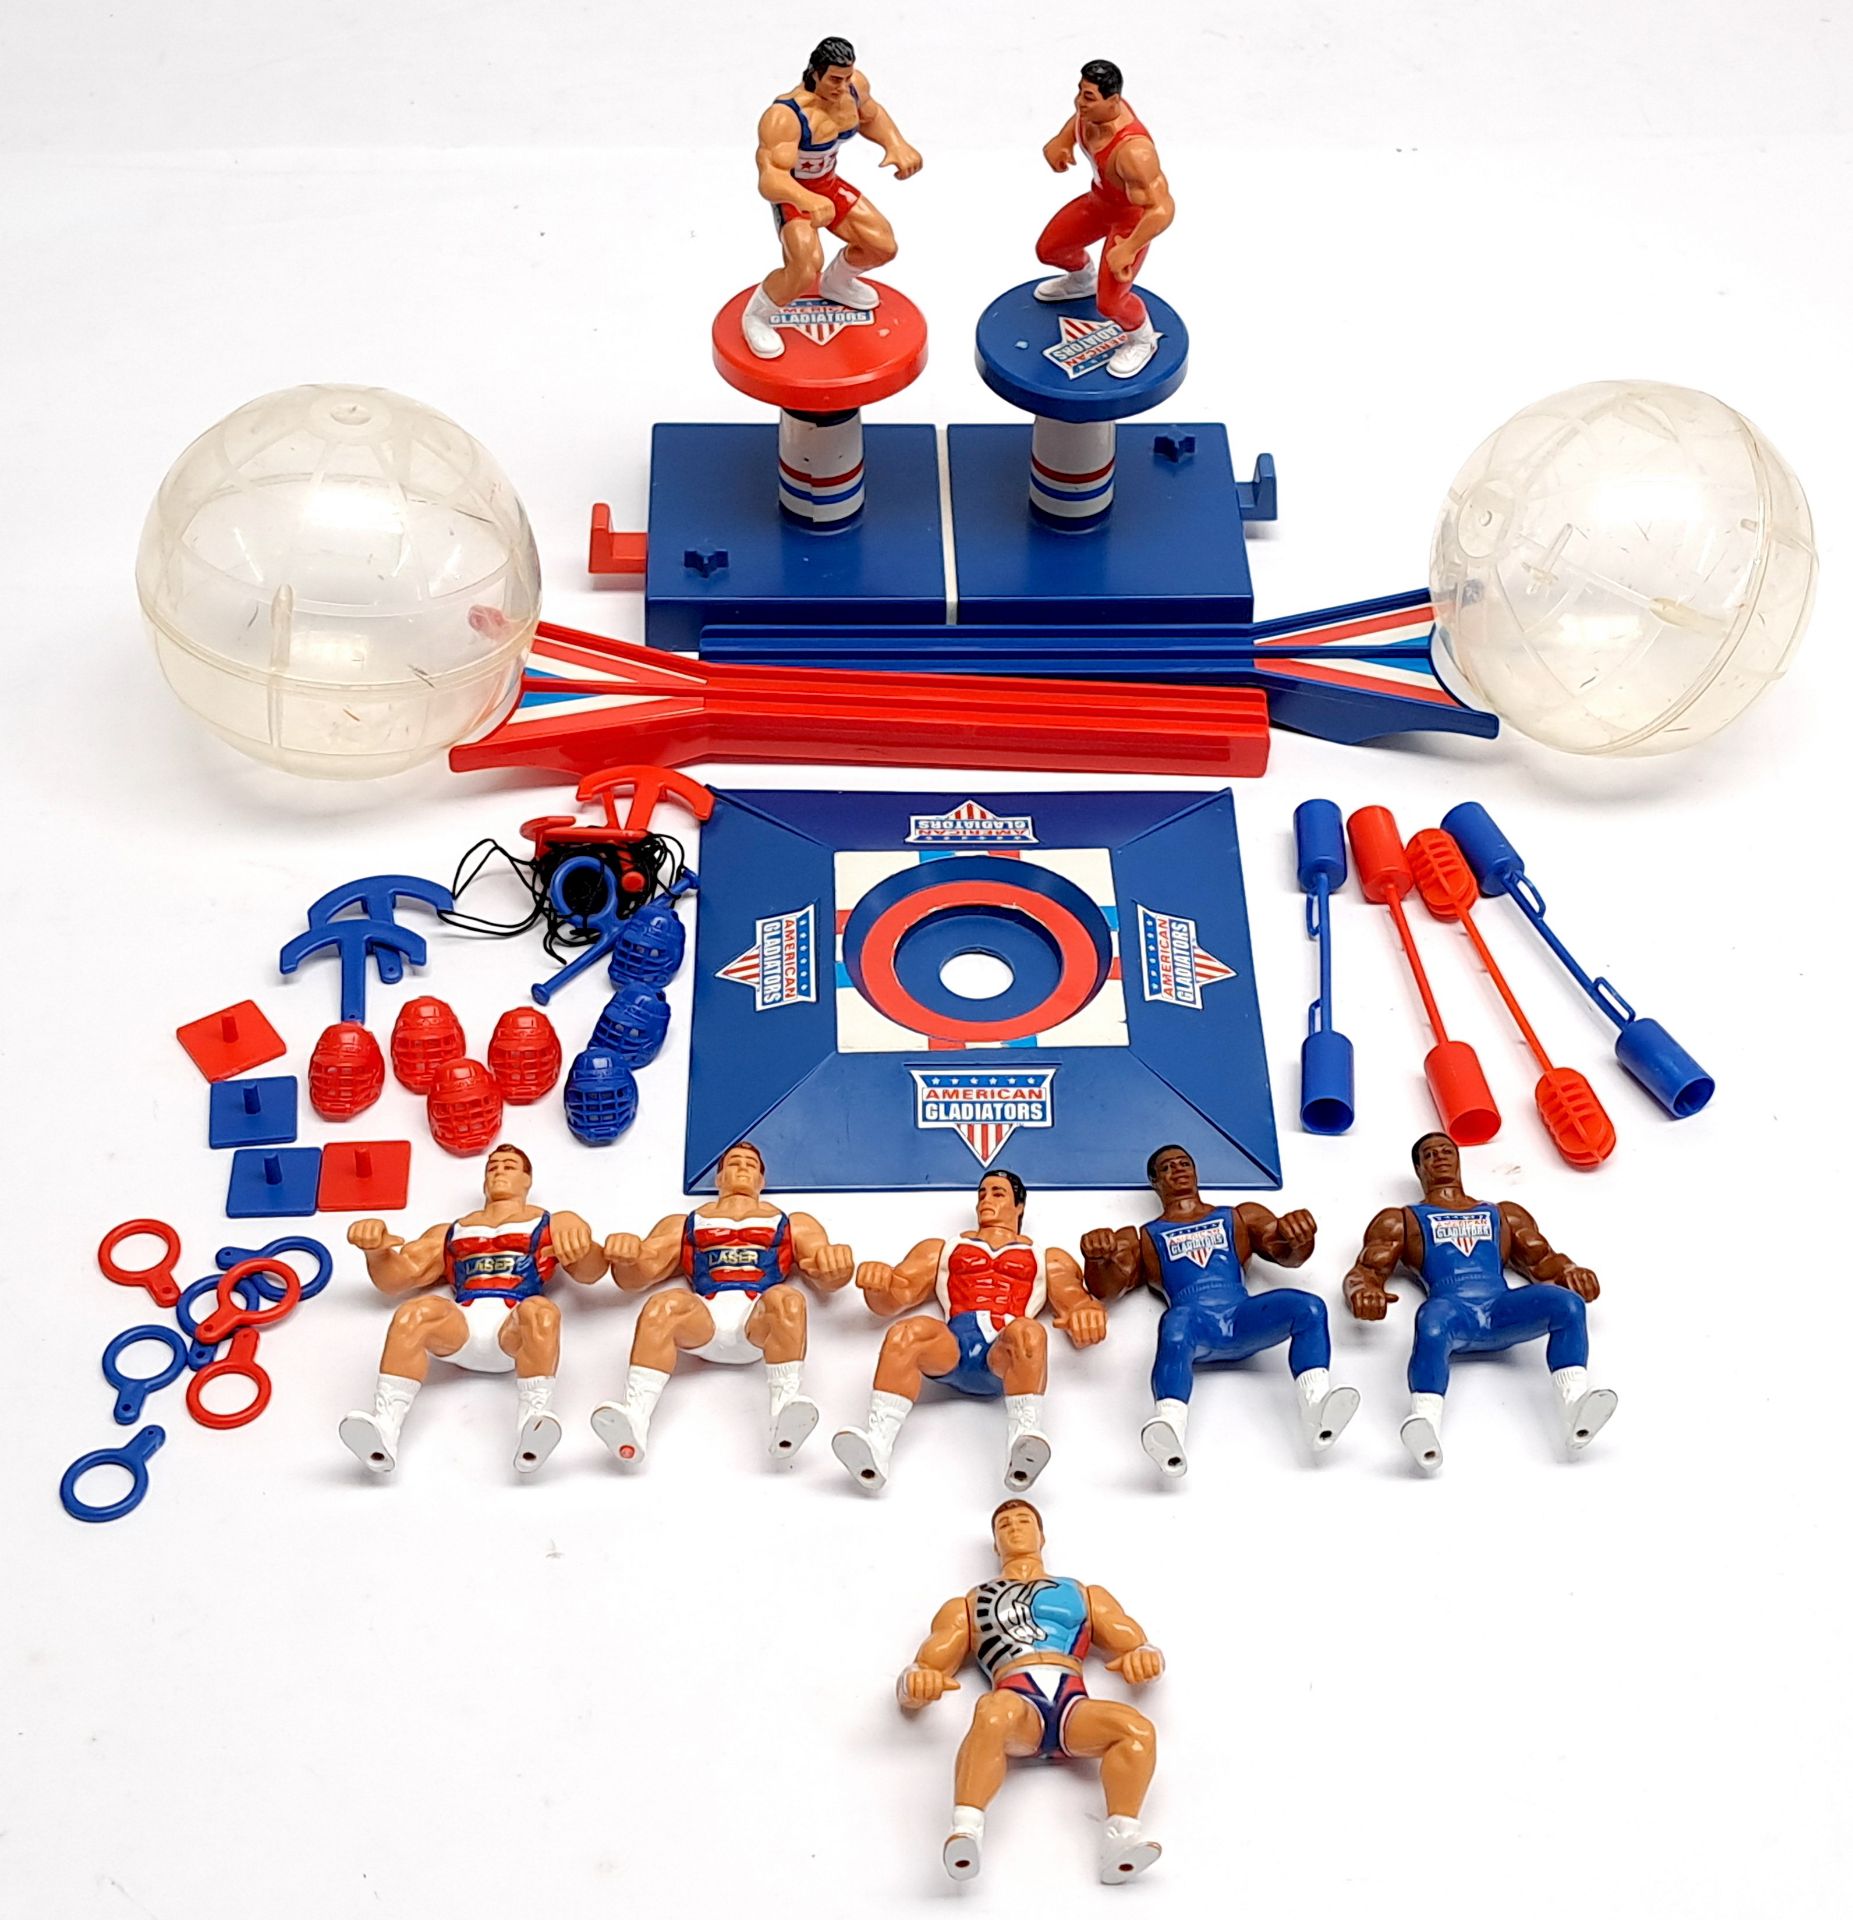 Mattel / The Samuel Goldwyn Company American Gladiators loose figures & accessories